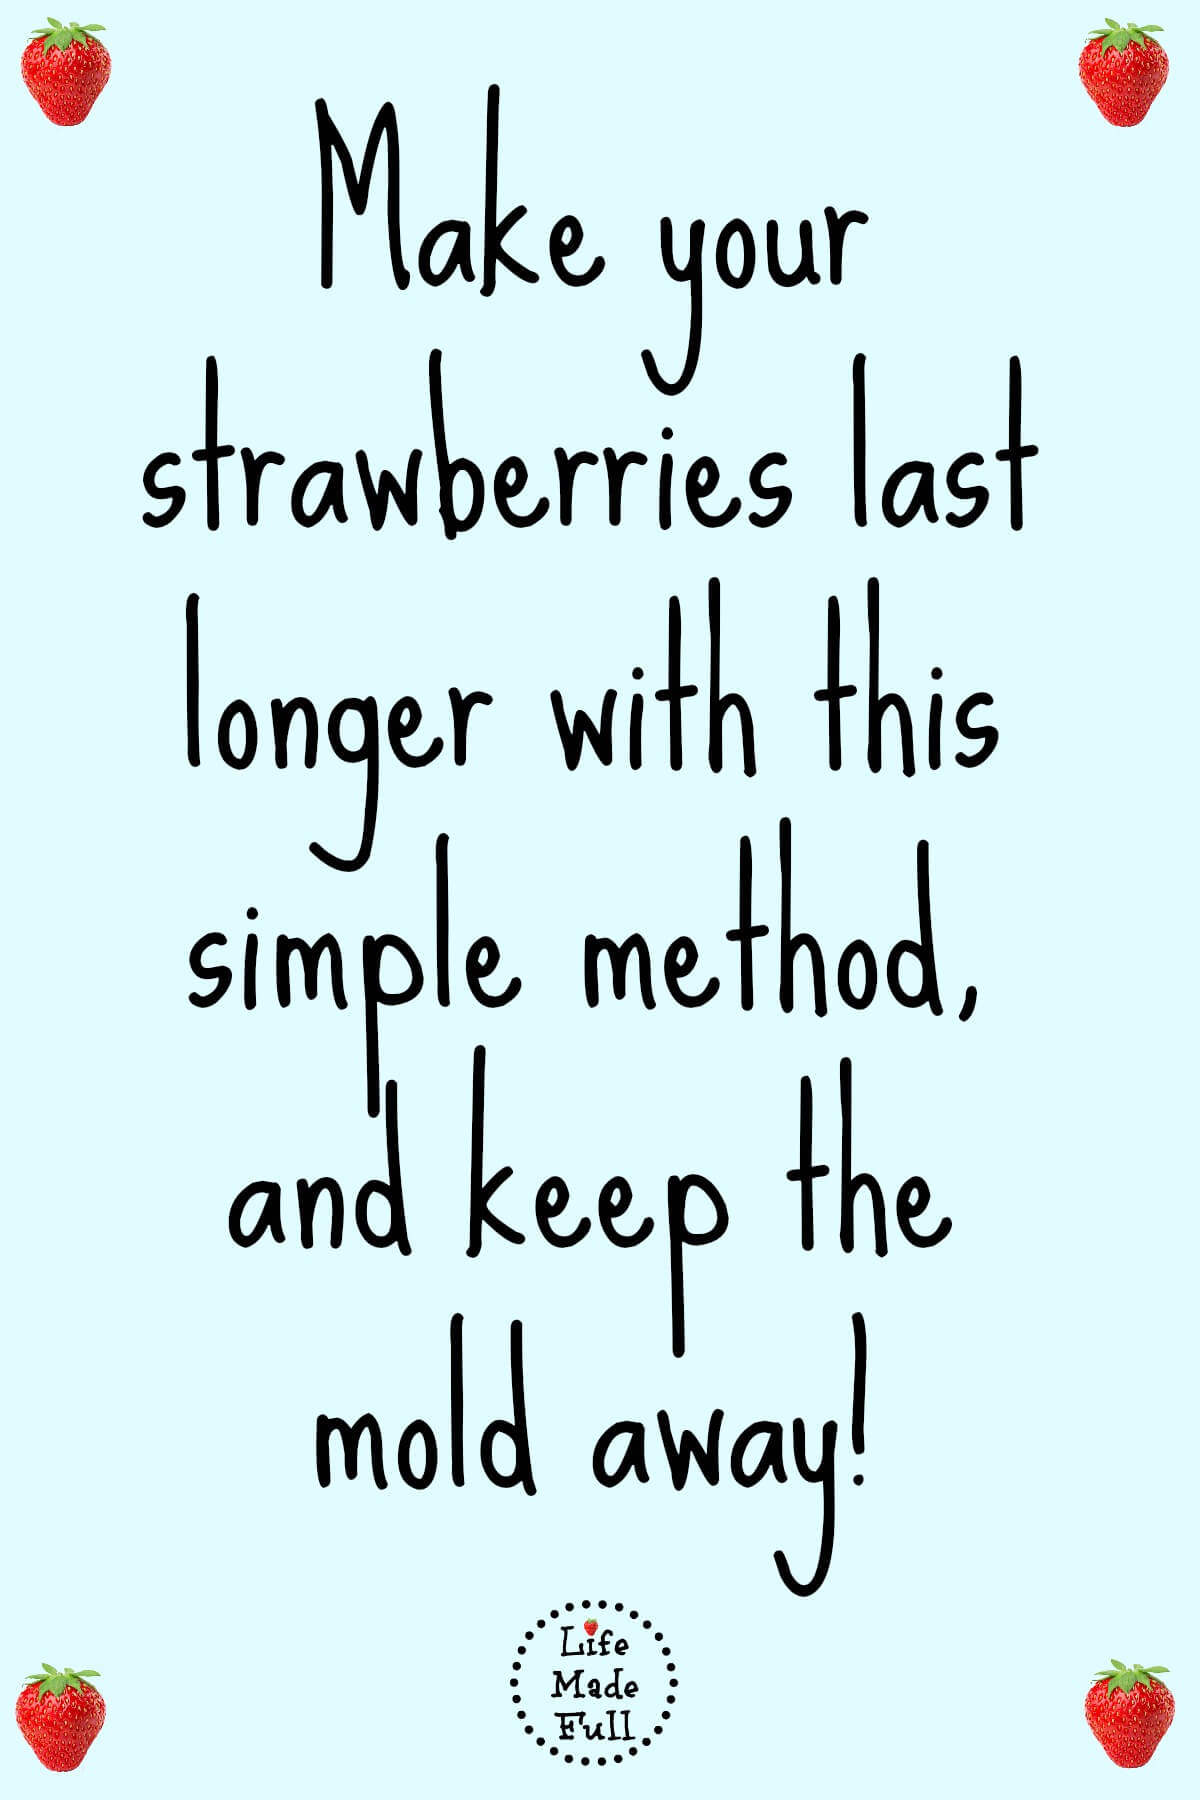 How to Make Your Strawberries Last Longer (Keep Strawberries Fresh)